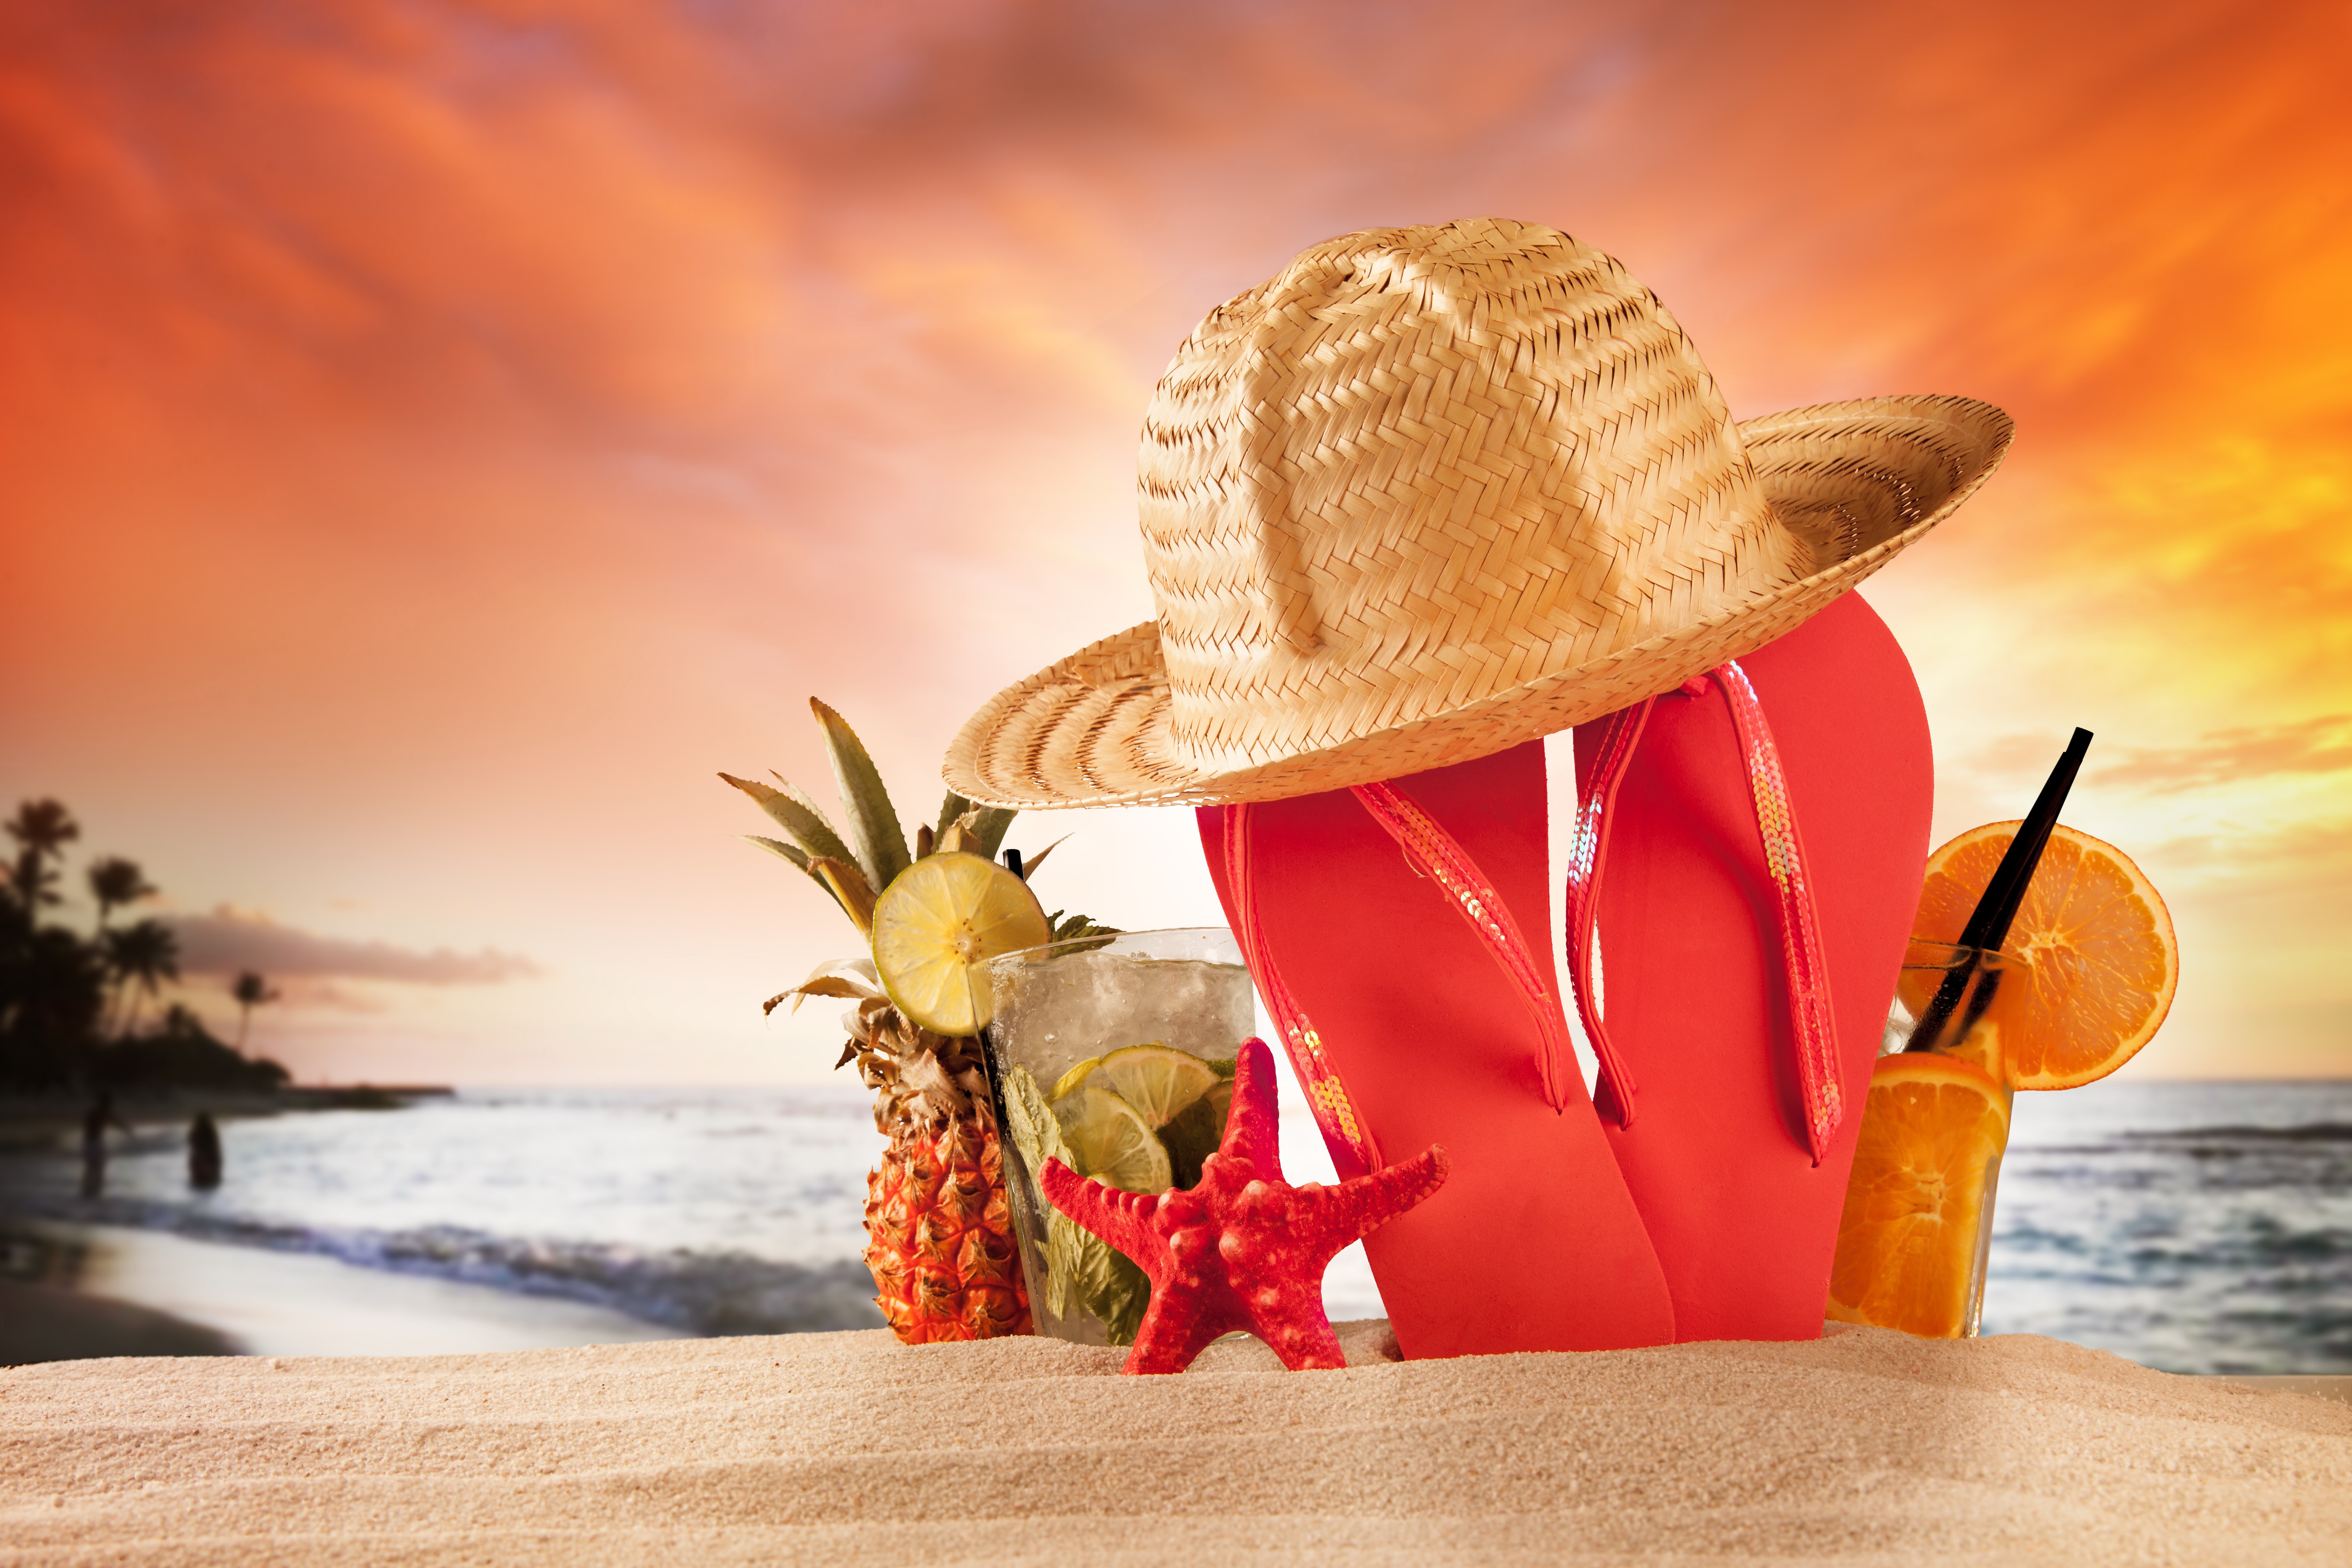 Шляпа на пляже. Коктейль на пляже. Море пляж коктейль. Шляпа для пляжа. Соломенная шляпа на берегу моря.